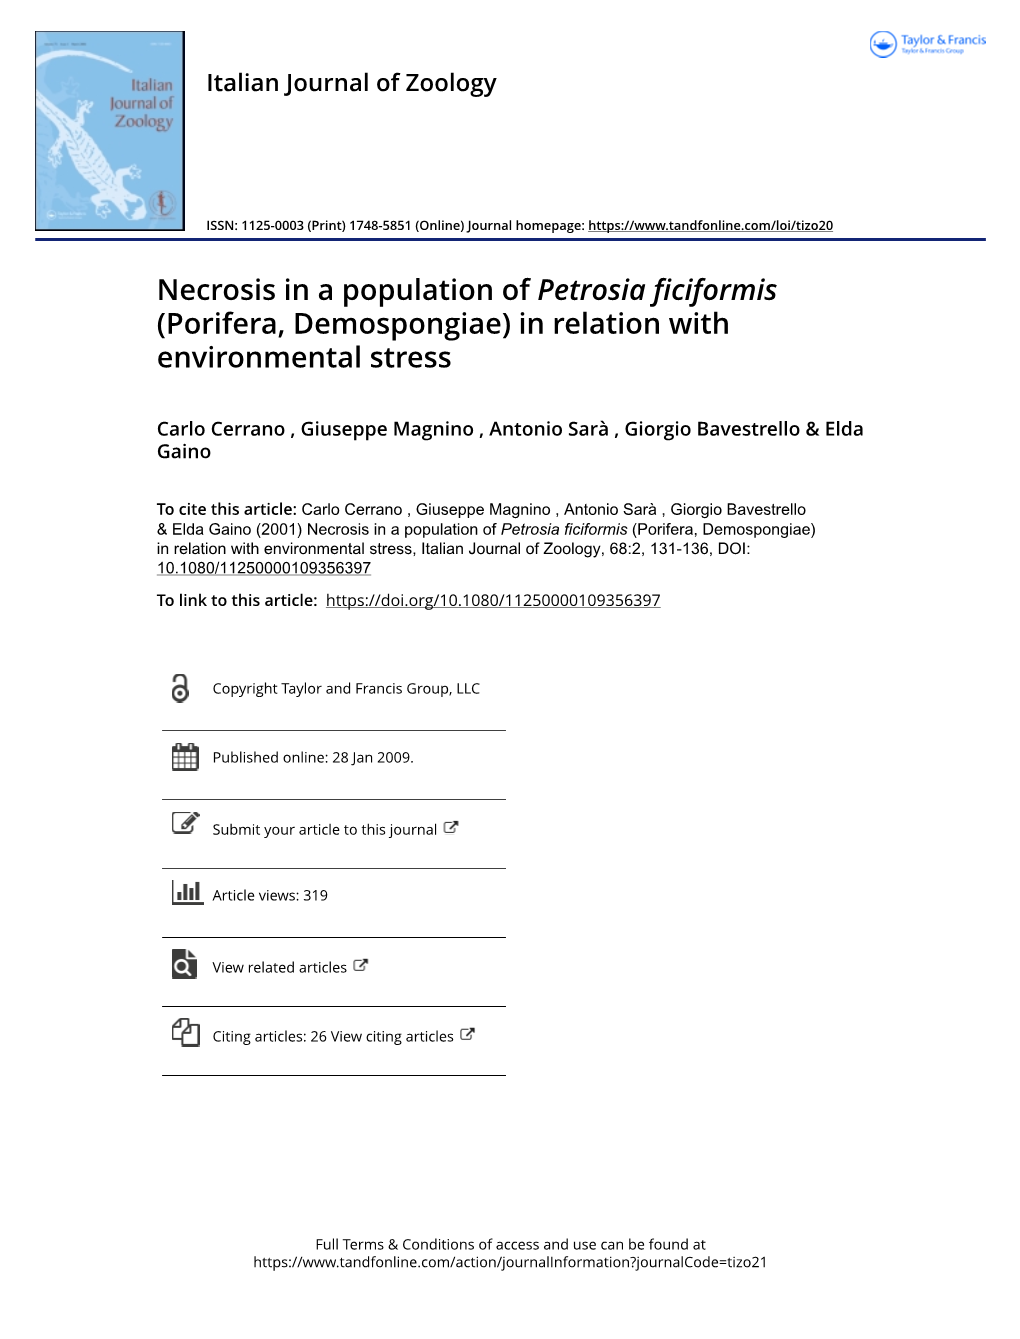 Necrosis in a Population of Petrosia Ficiformis (Porifera, Demospongiae) in Relation with Environmental Stress